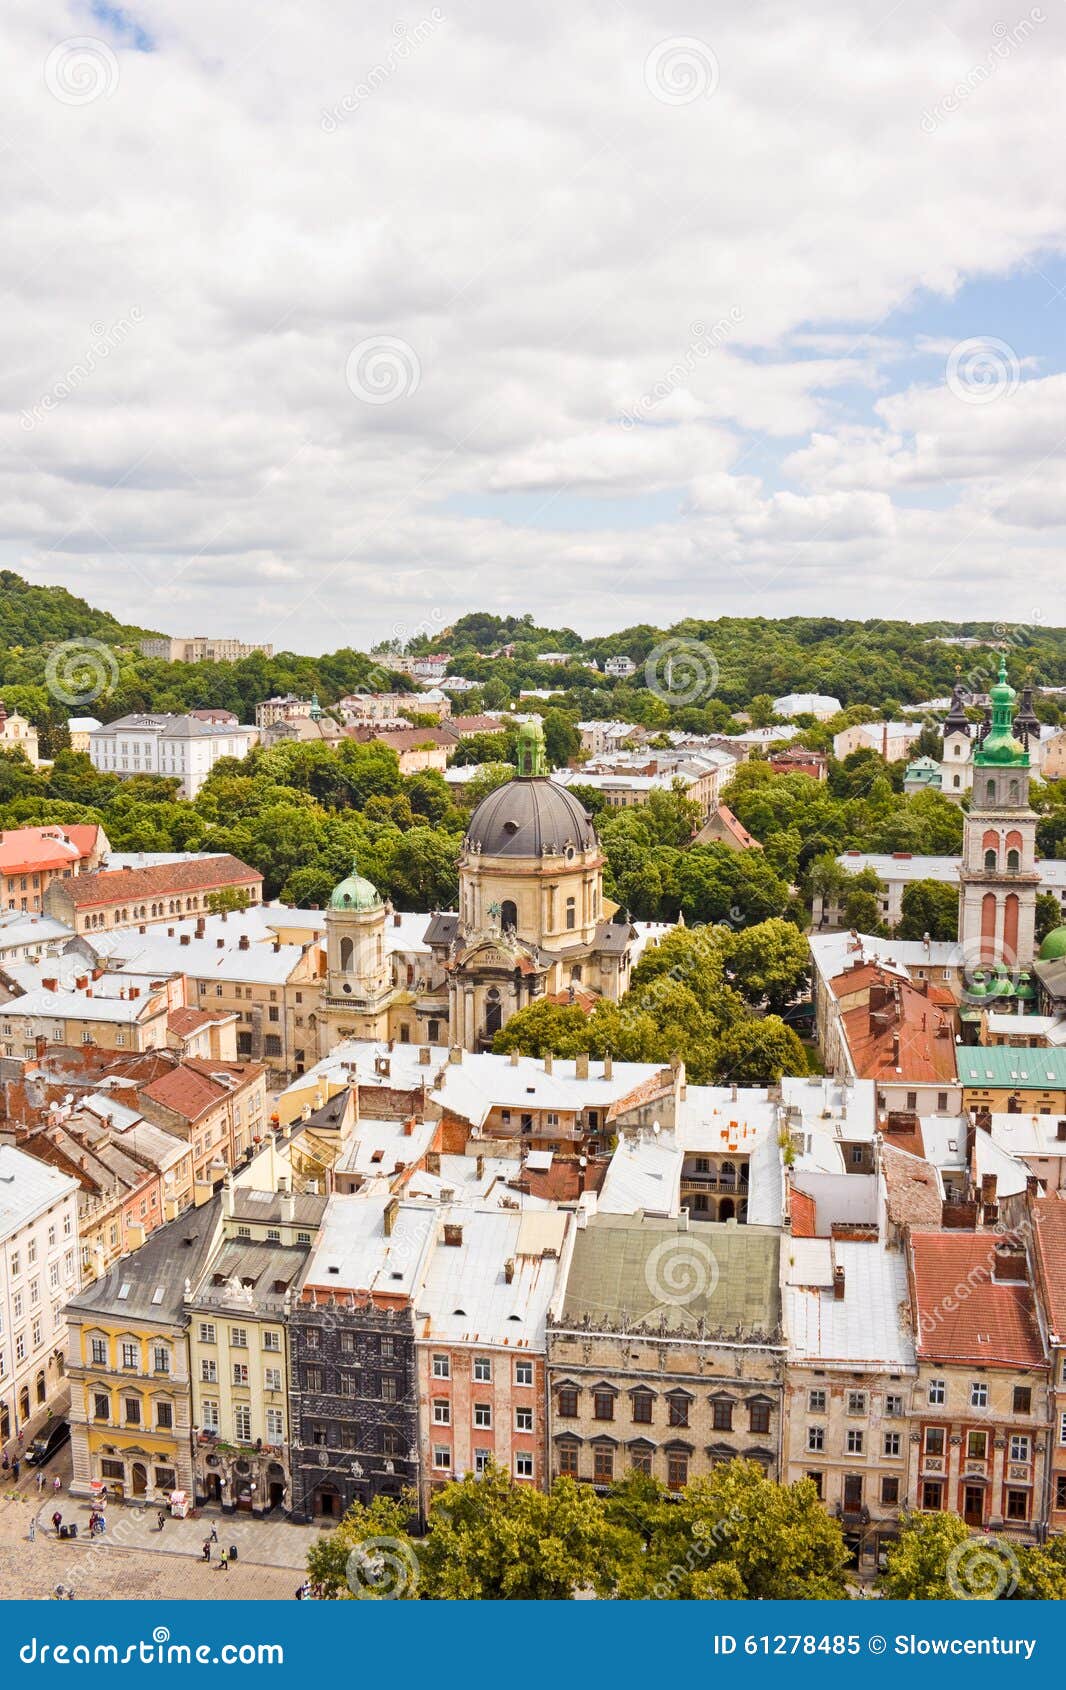 beautiful high up view of lviv, ukraine